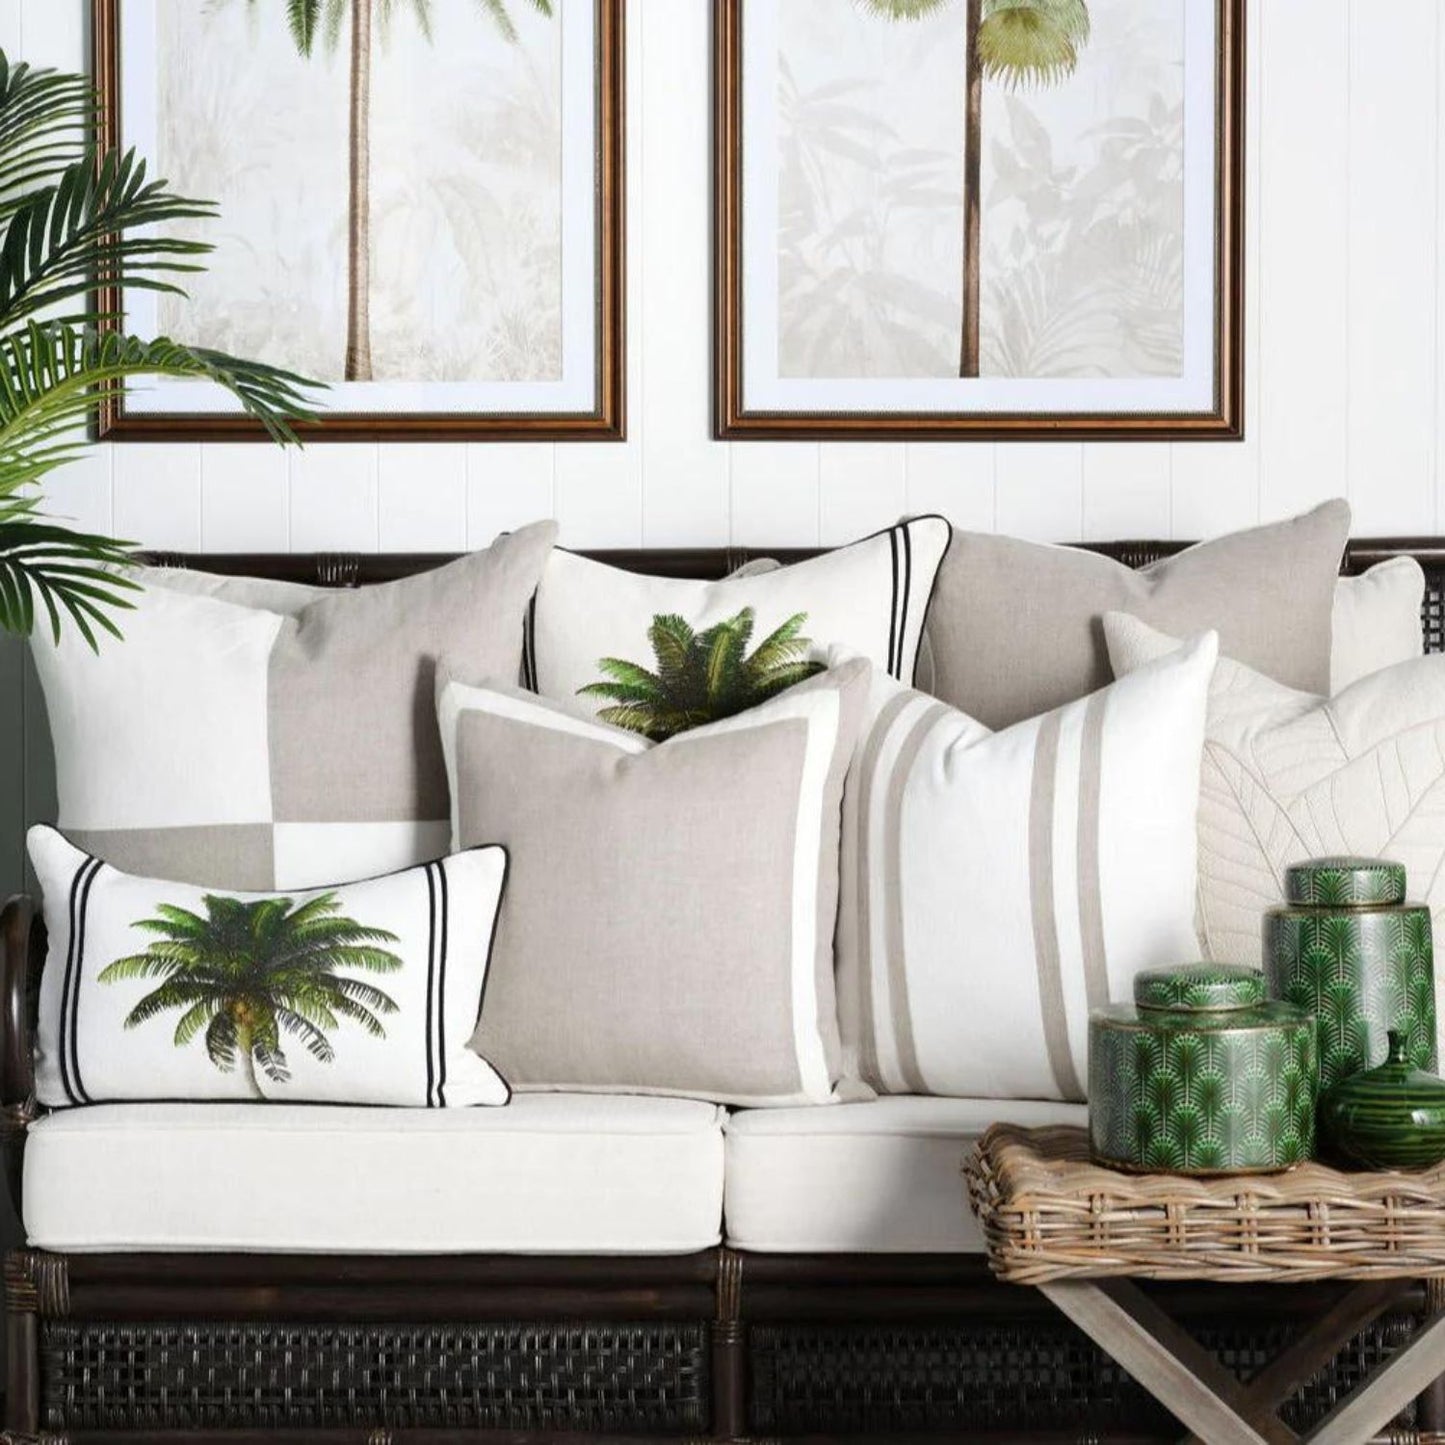 White, black and green cushion 50x50 Palm tropical coastal design